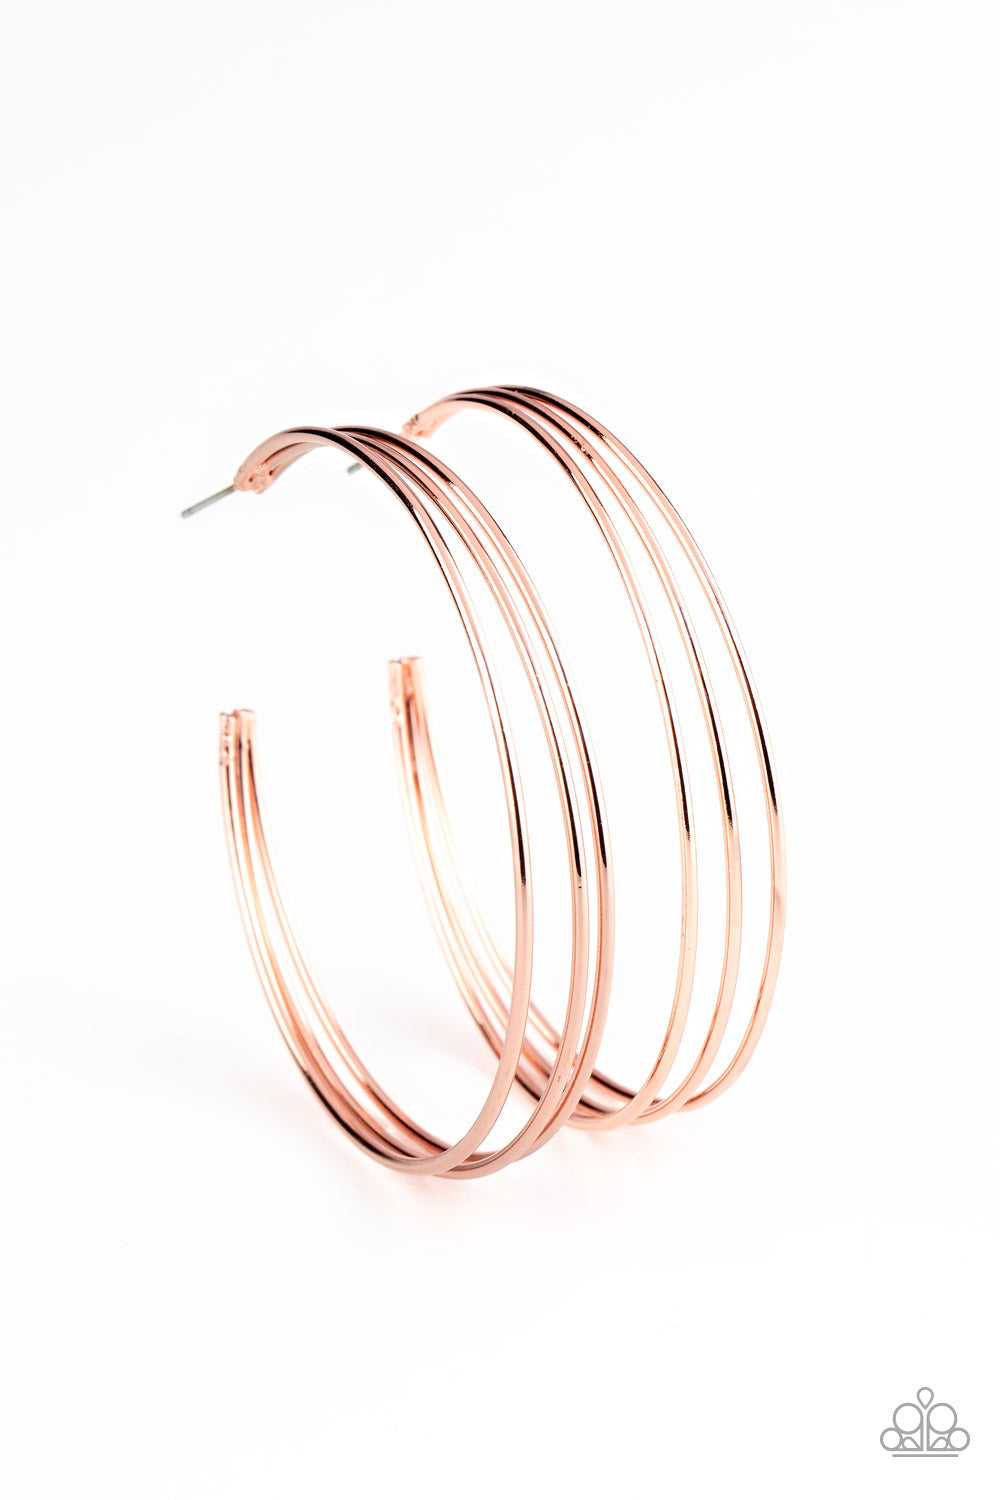 . Rimmed Radiance - Copper Earrings